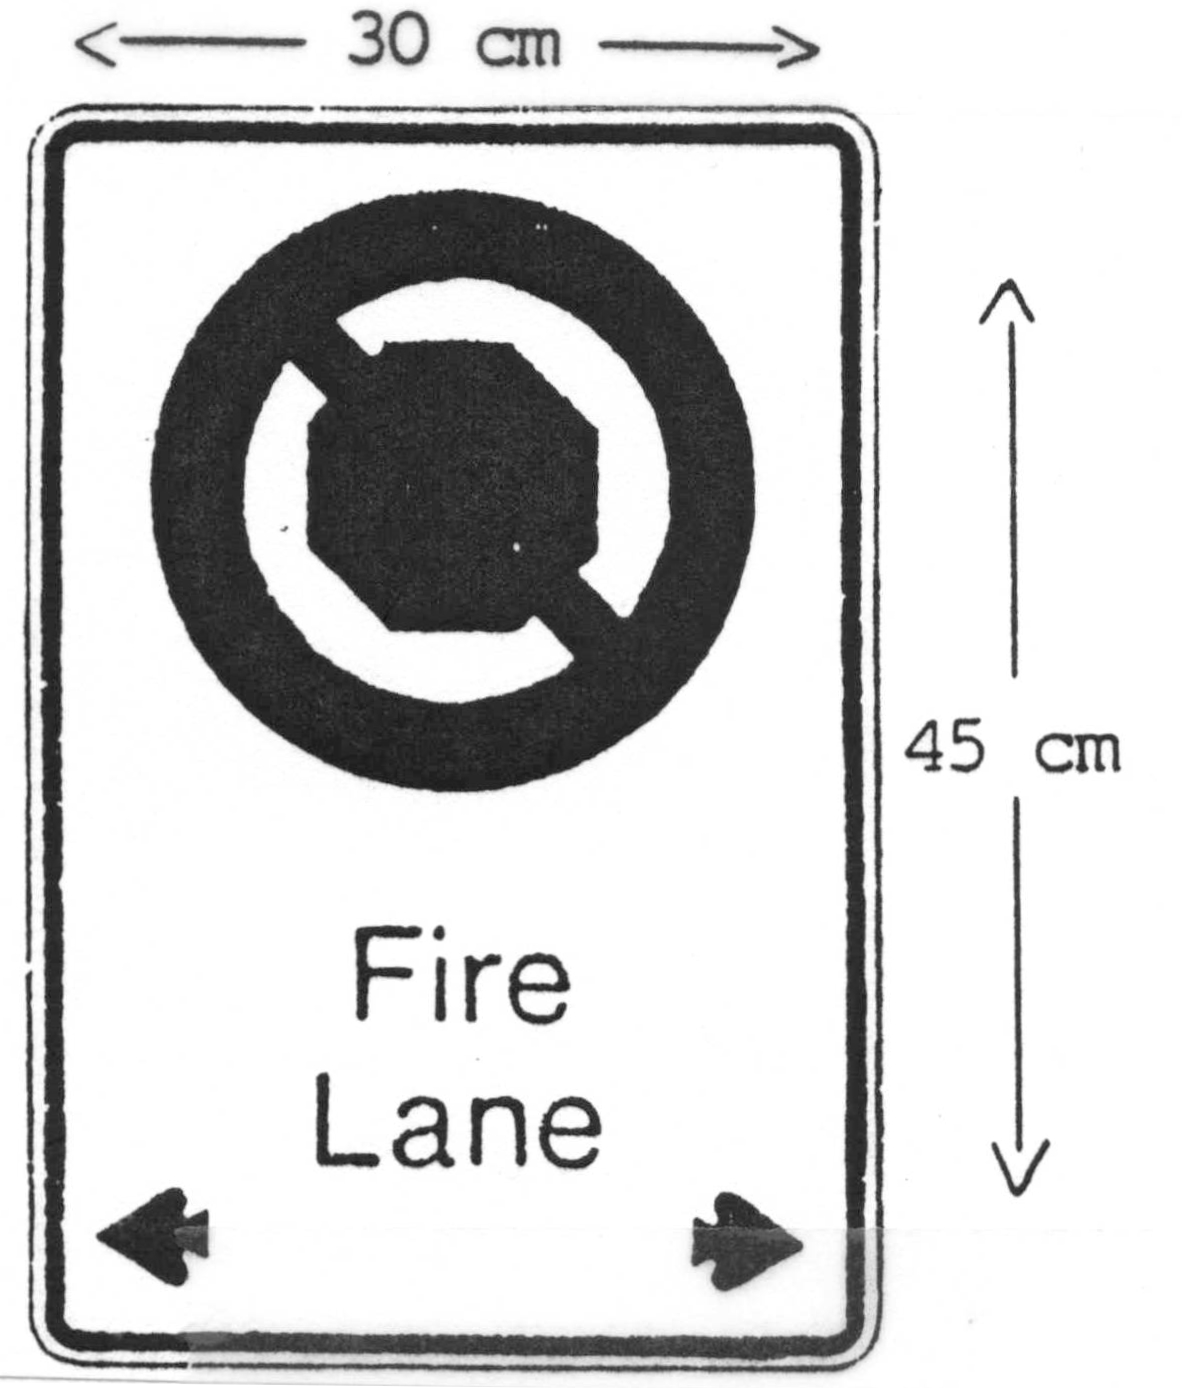 Sign: Fire Lane